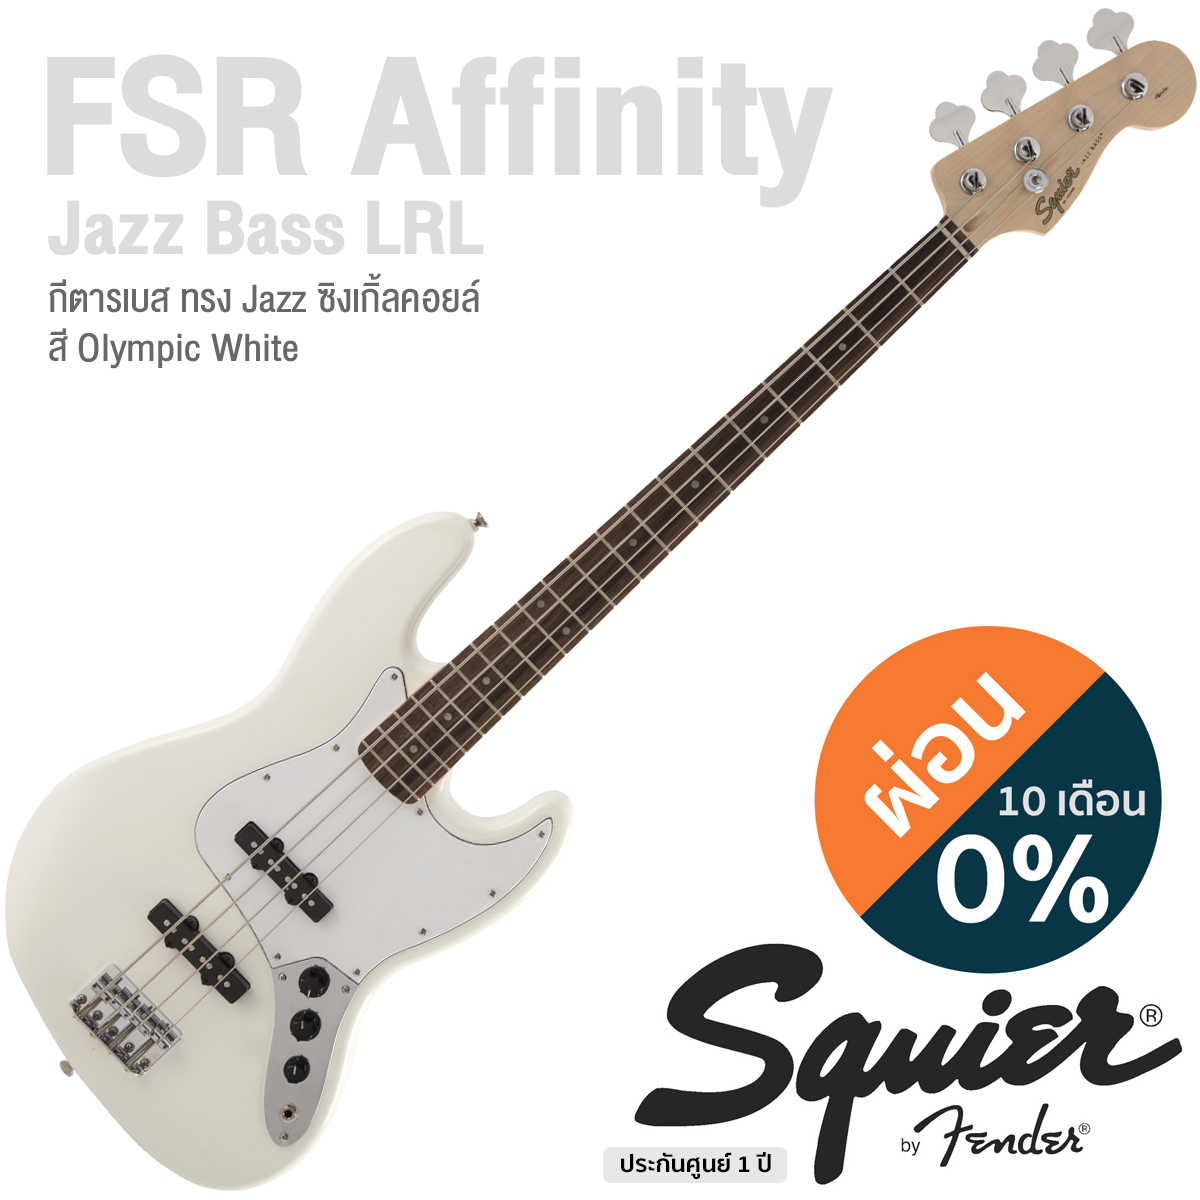 Fender® Squier FSR Affinity Jazz Bass กีตาร์เบส ทรง Jazz ปิ๊กอัพซิงเกิ้ลคอยล์ ไม้อัลเดอร์ คอเมเปิ้ล ** ประกันศูนย์ 1 ปี **